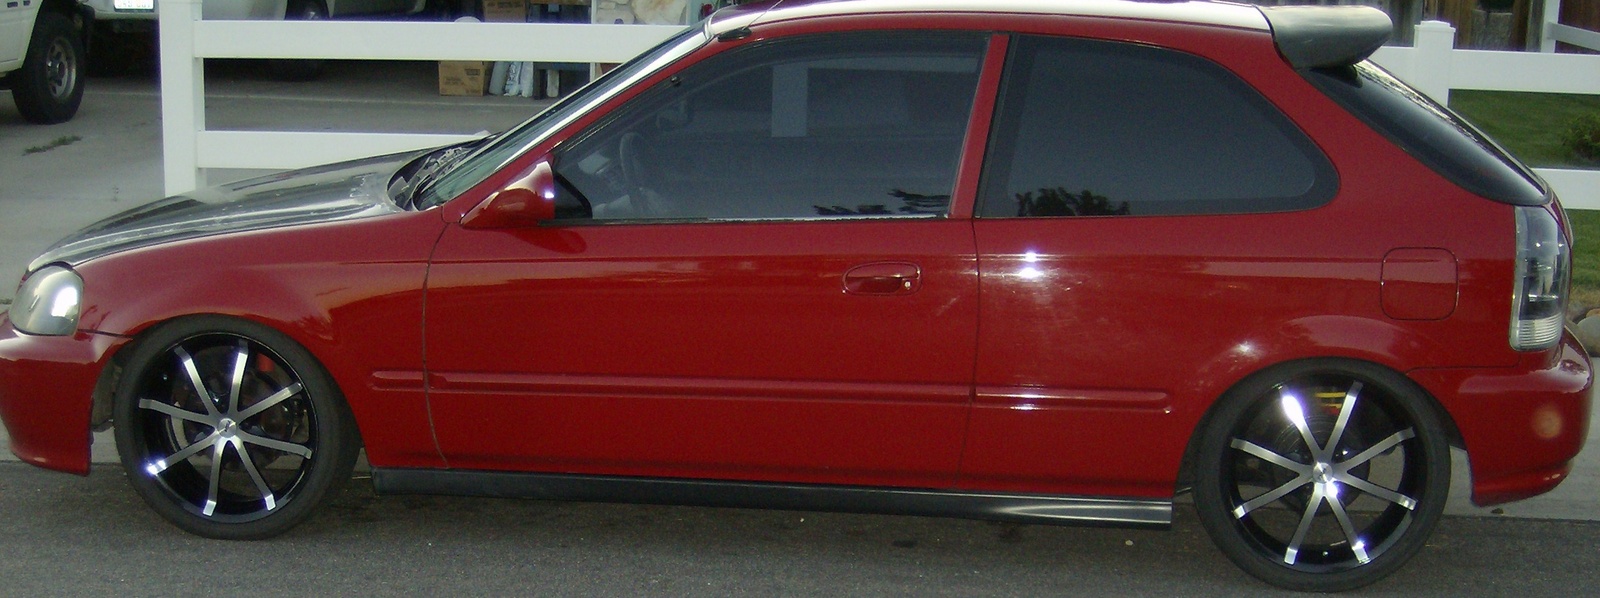 2000 Honda civic cx hatchback reviews #1